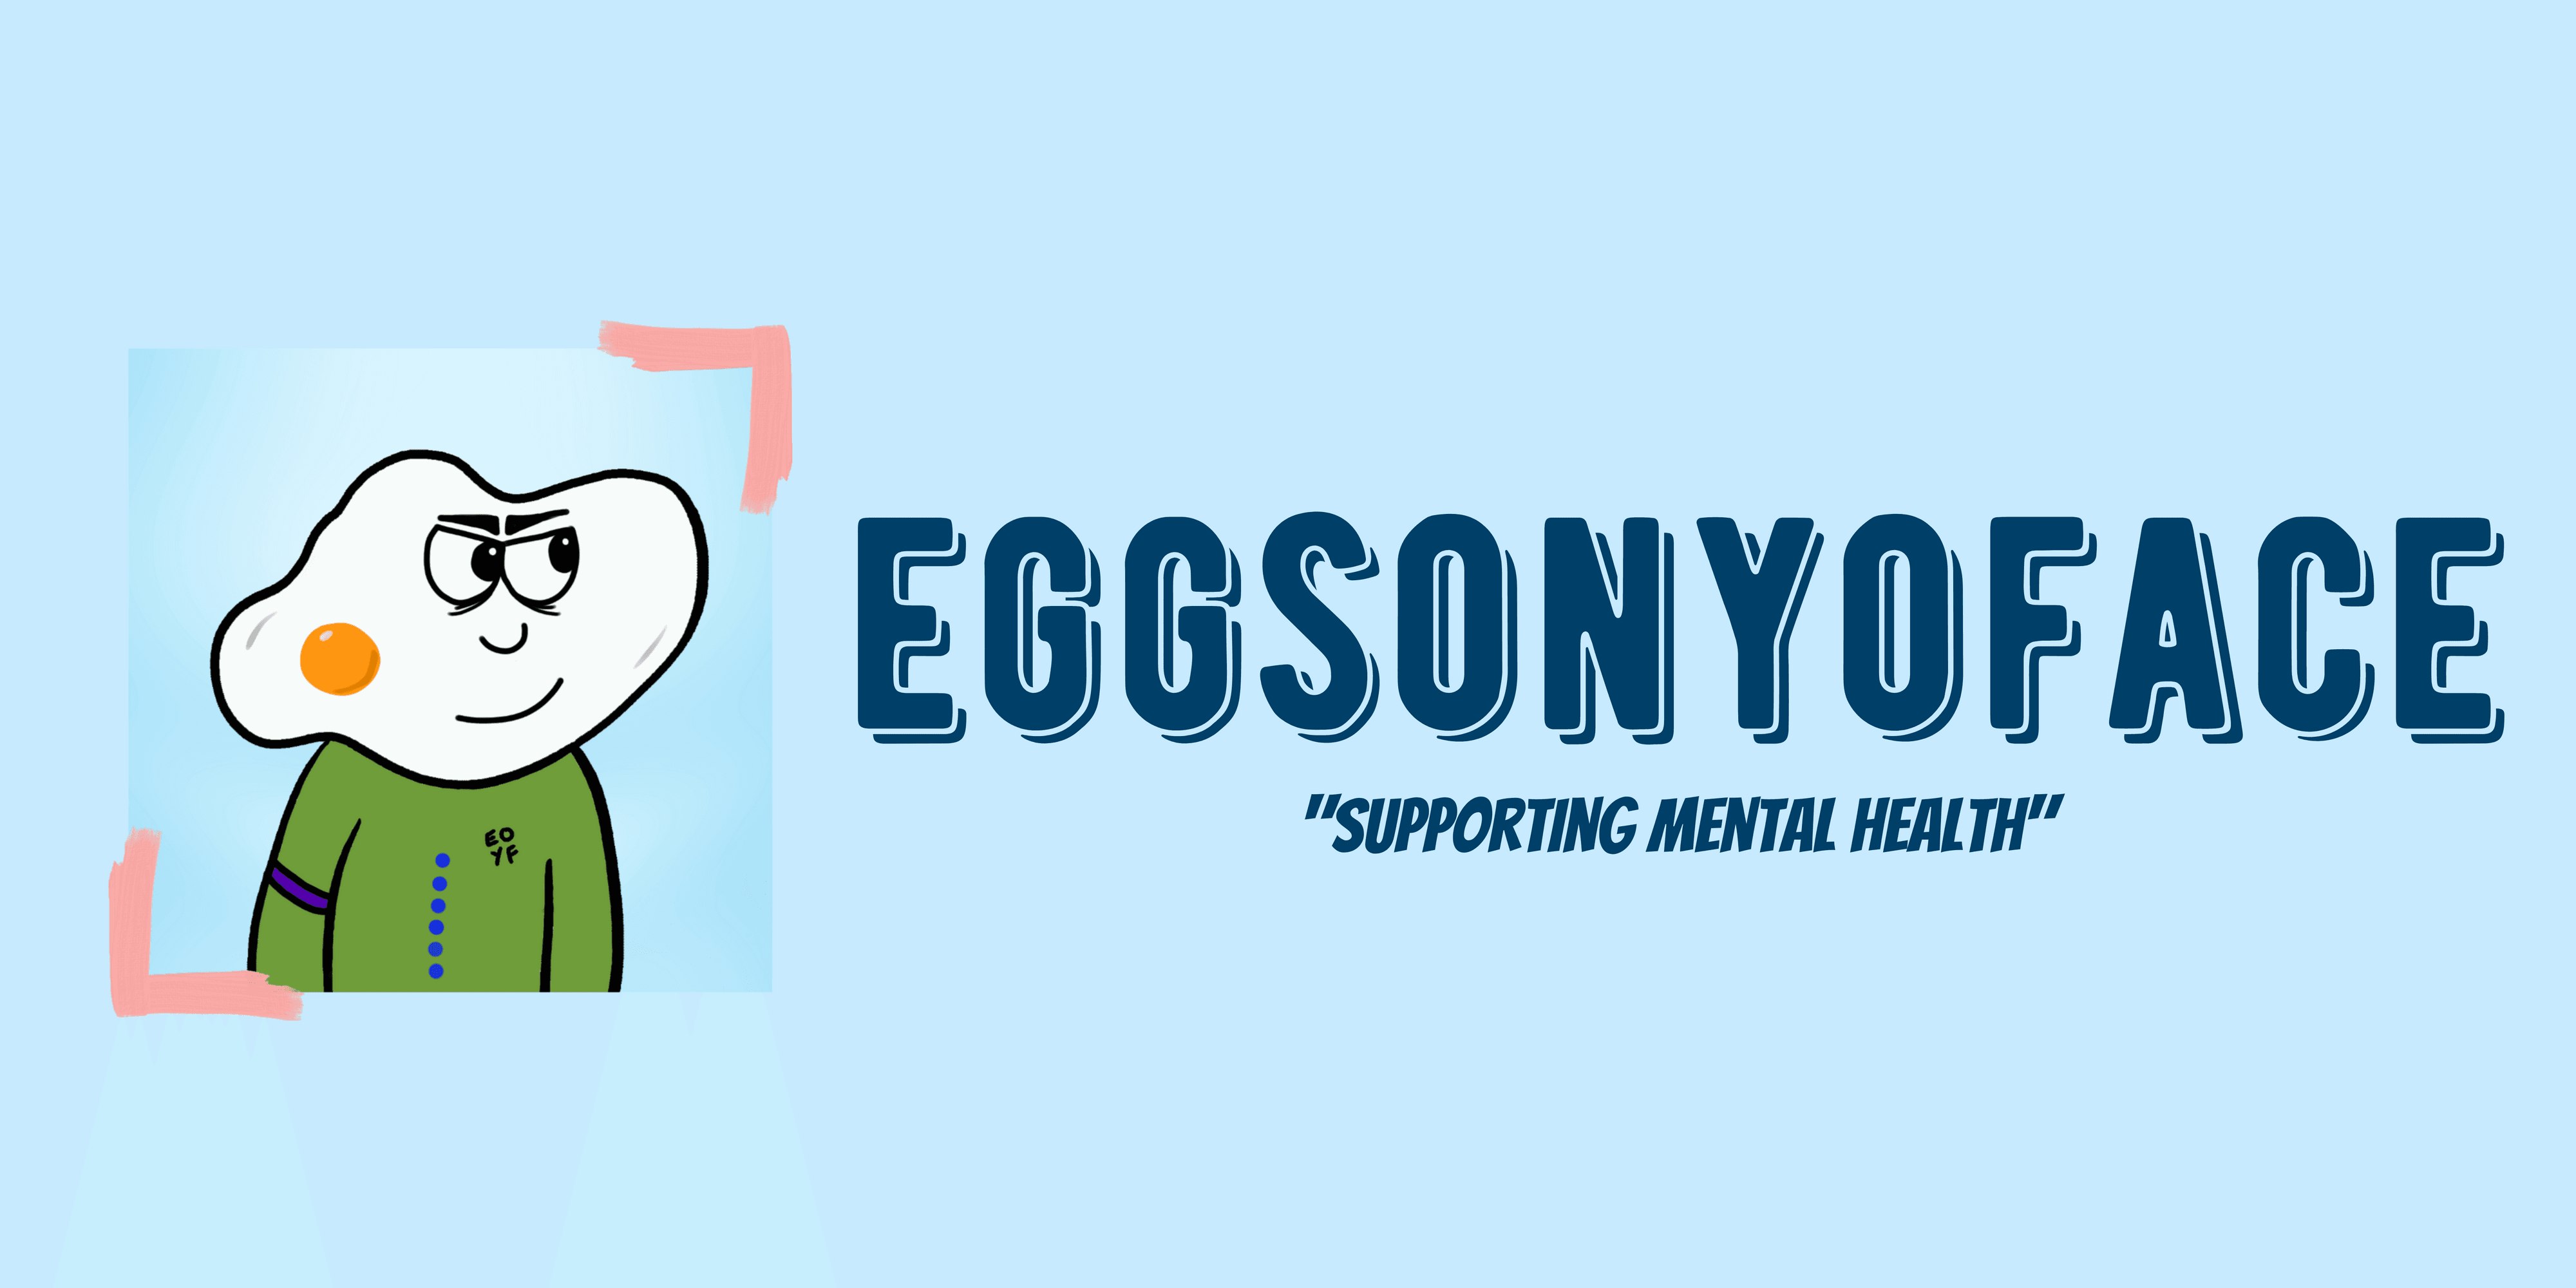 eggsonyoface banner